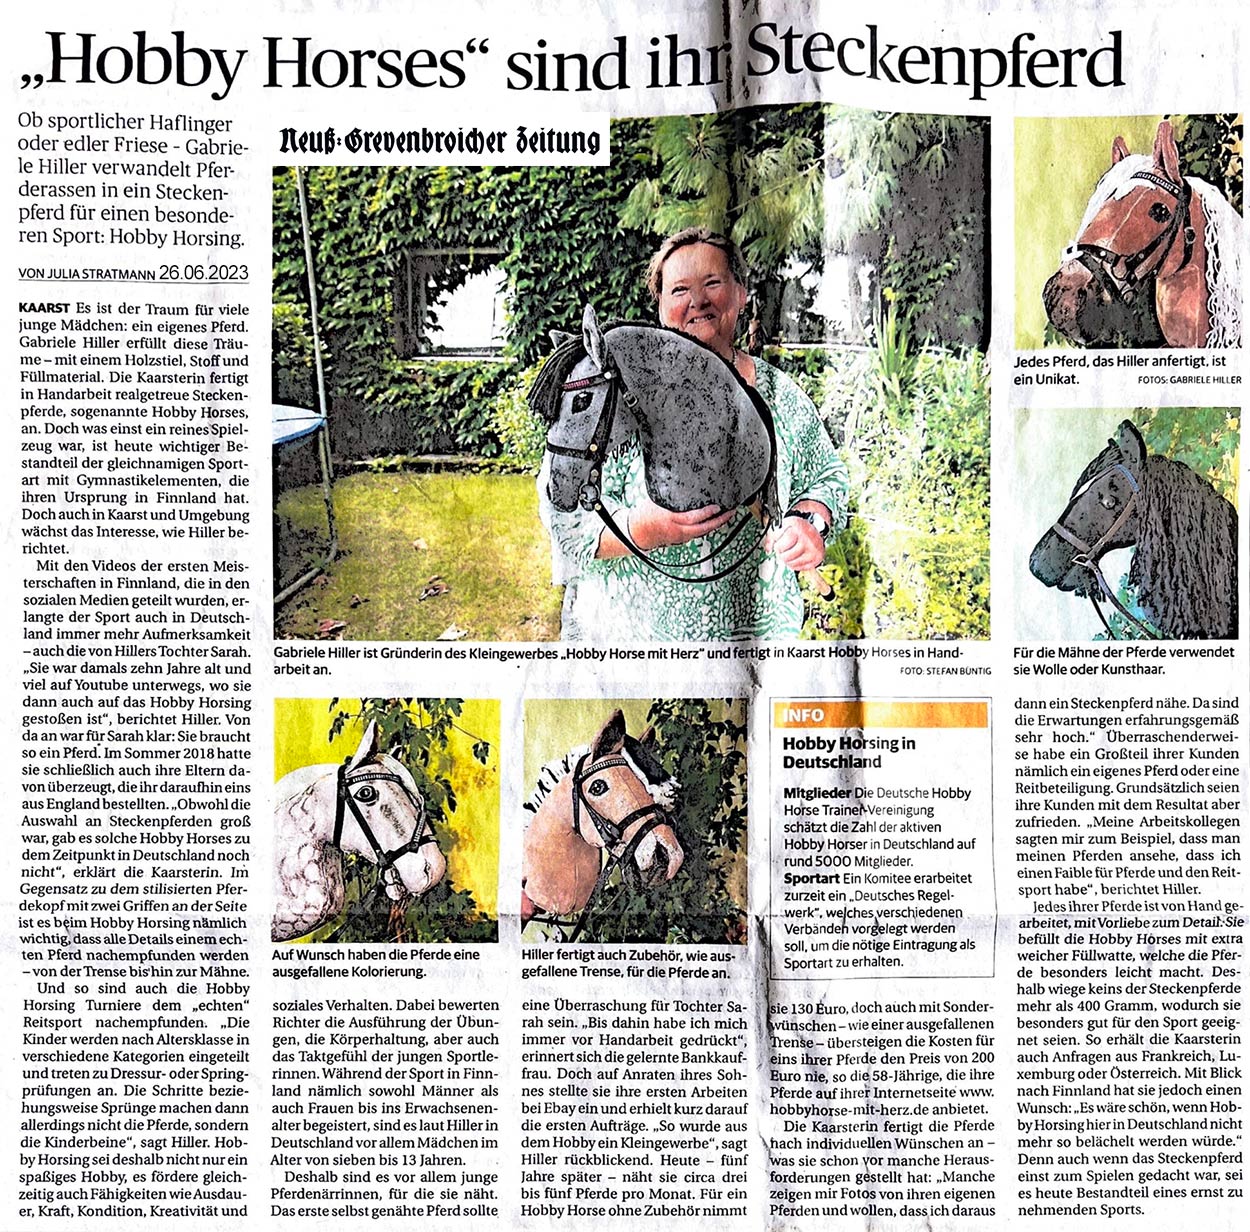 Pressebericht über Hobby Horse